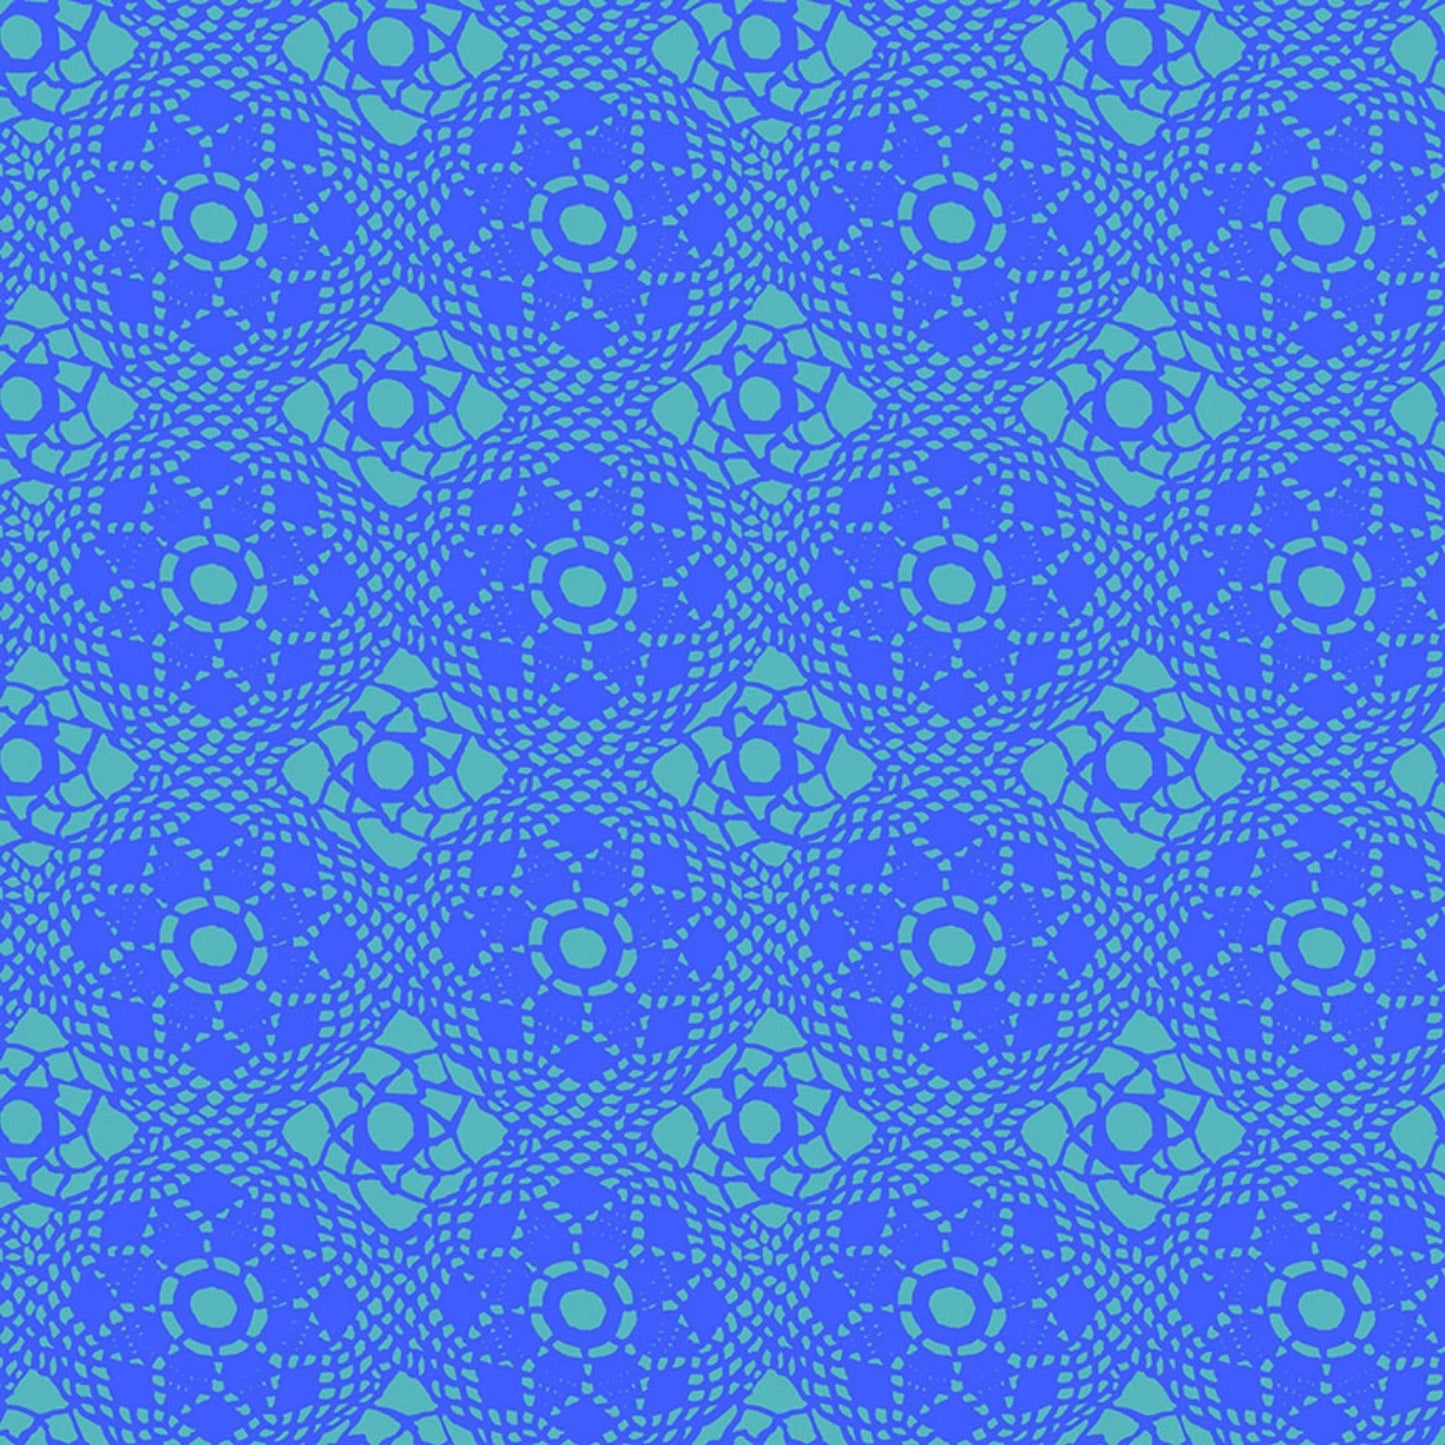 Crochet - Alison Glass Sun Prints 2021 Fabric Range - Andover - Blue